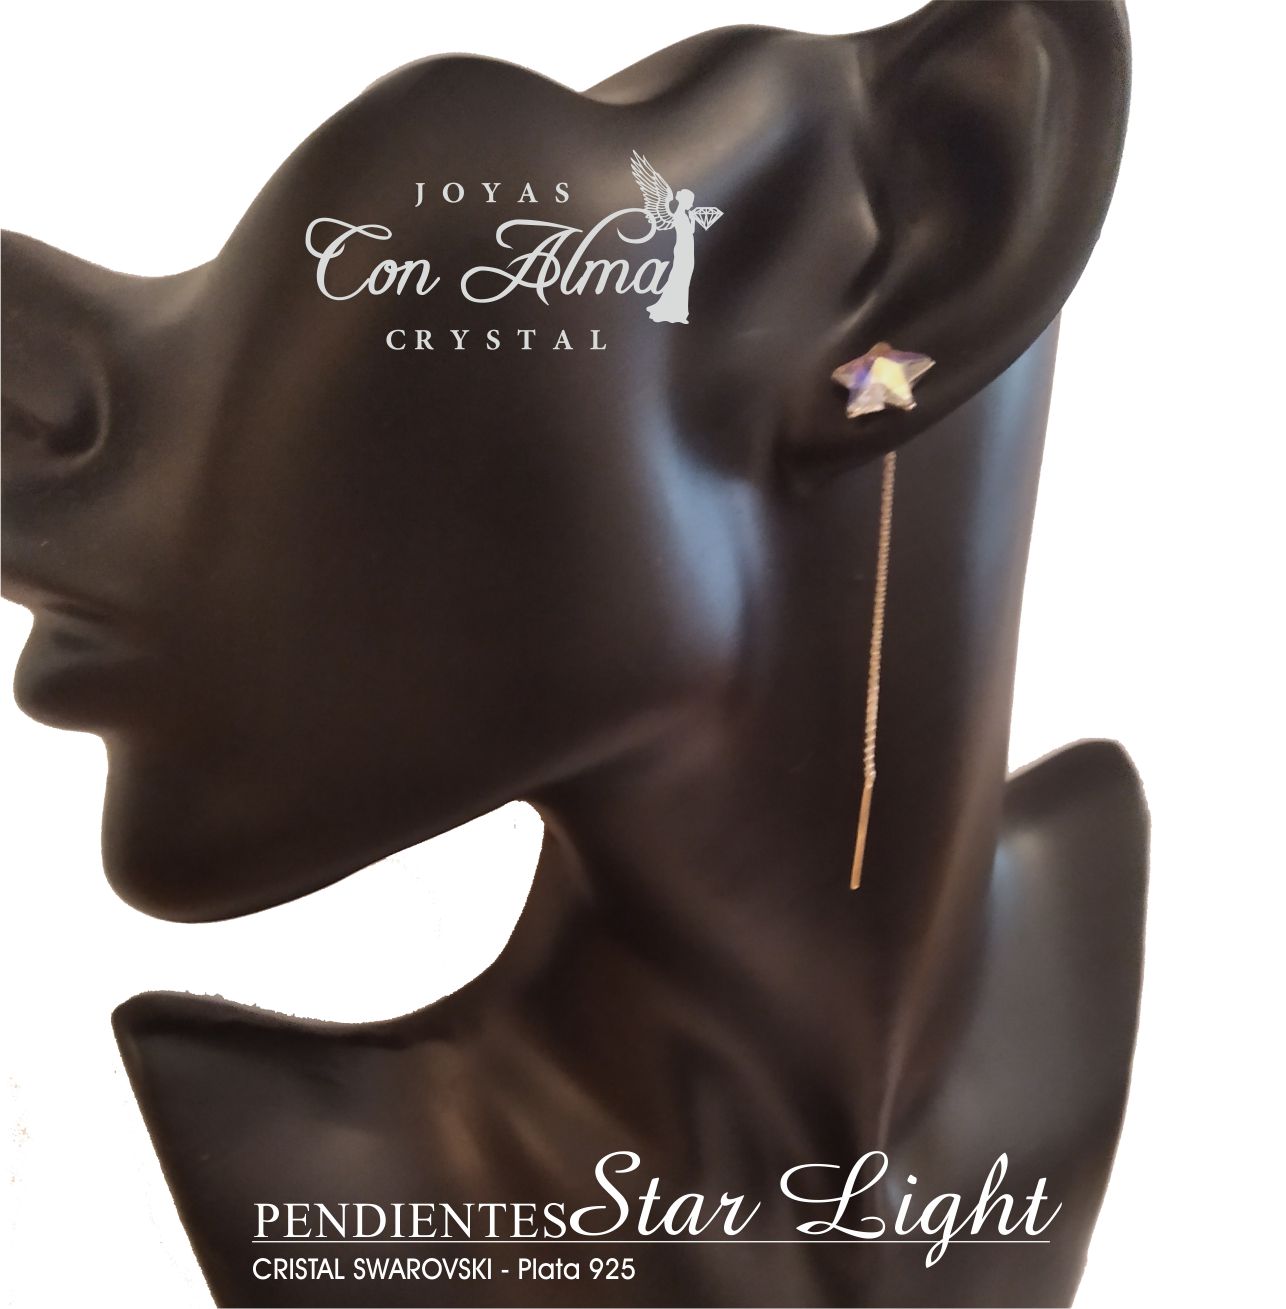 Pendientes Star Light 29,99 €